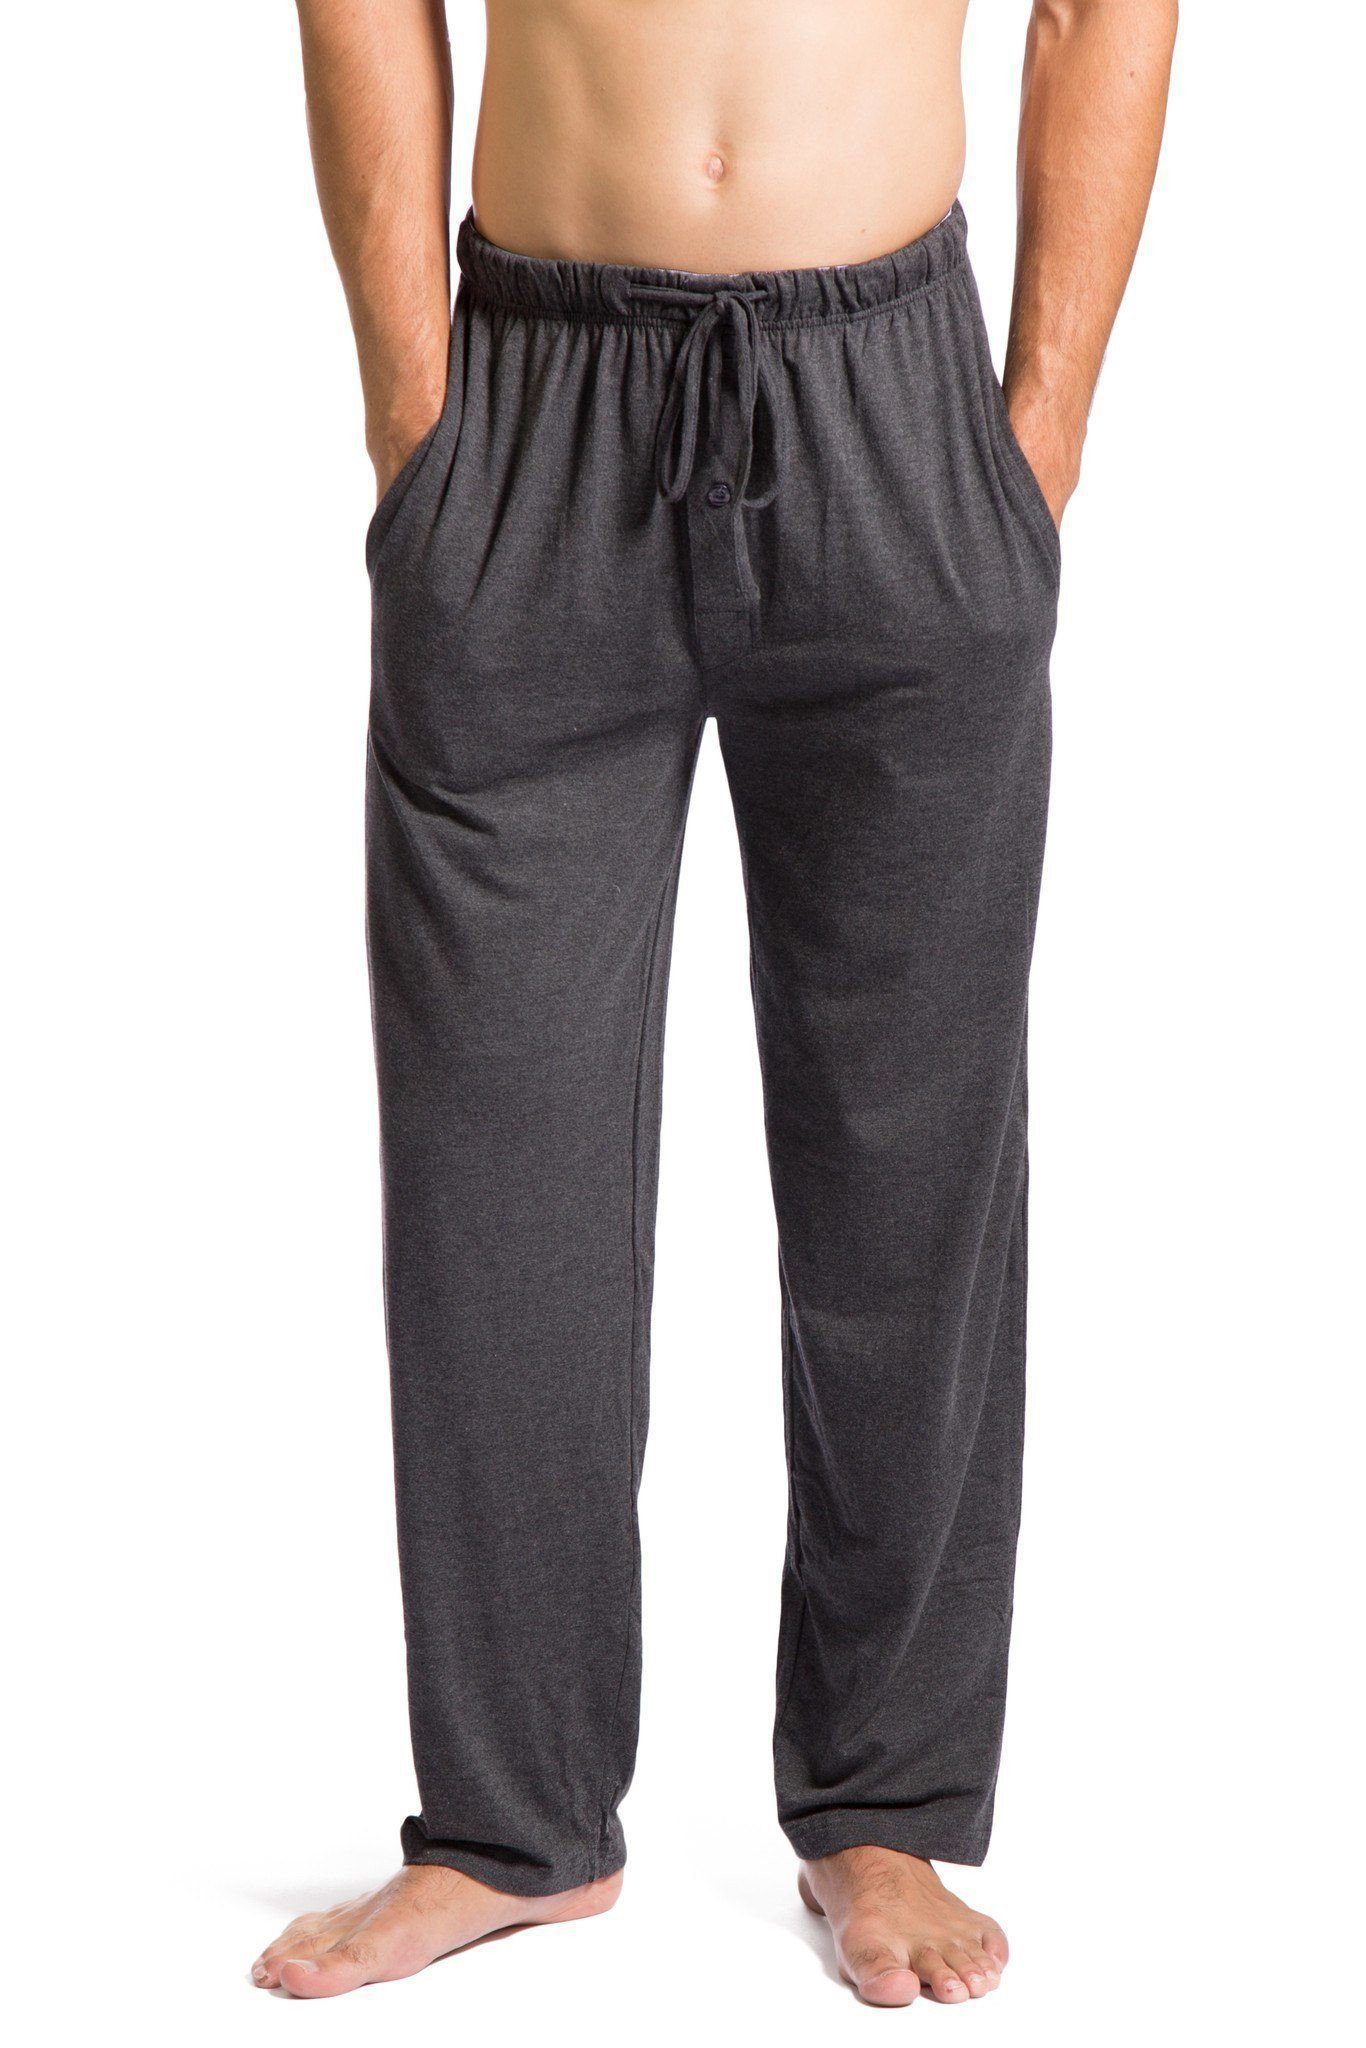 Mens Cotton Pyjama Pants| Loungewear Pants| Comfort Pants| Night Pants |  Track Pants